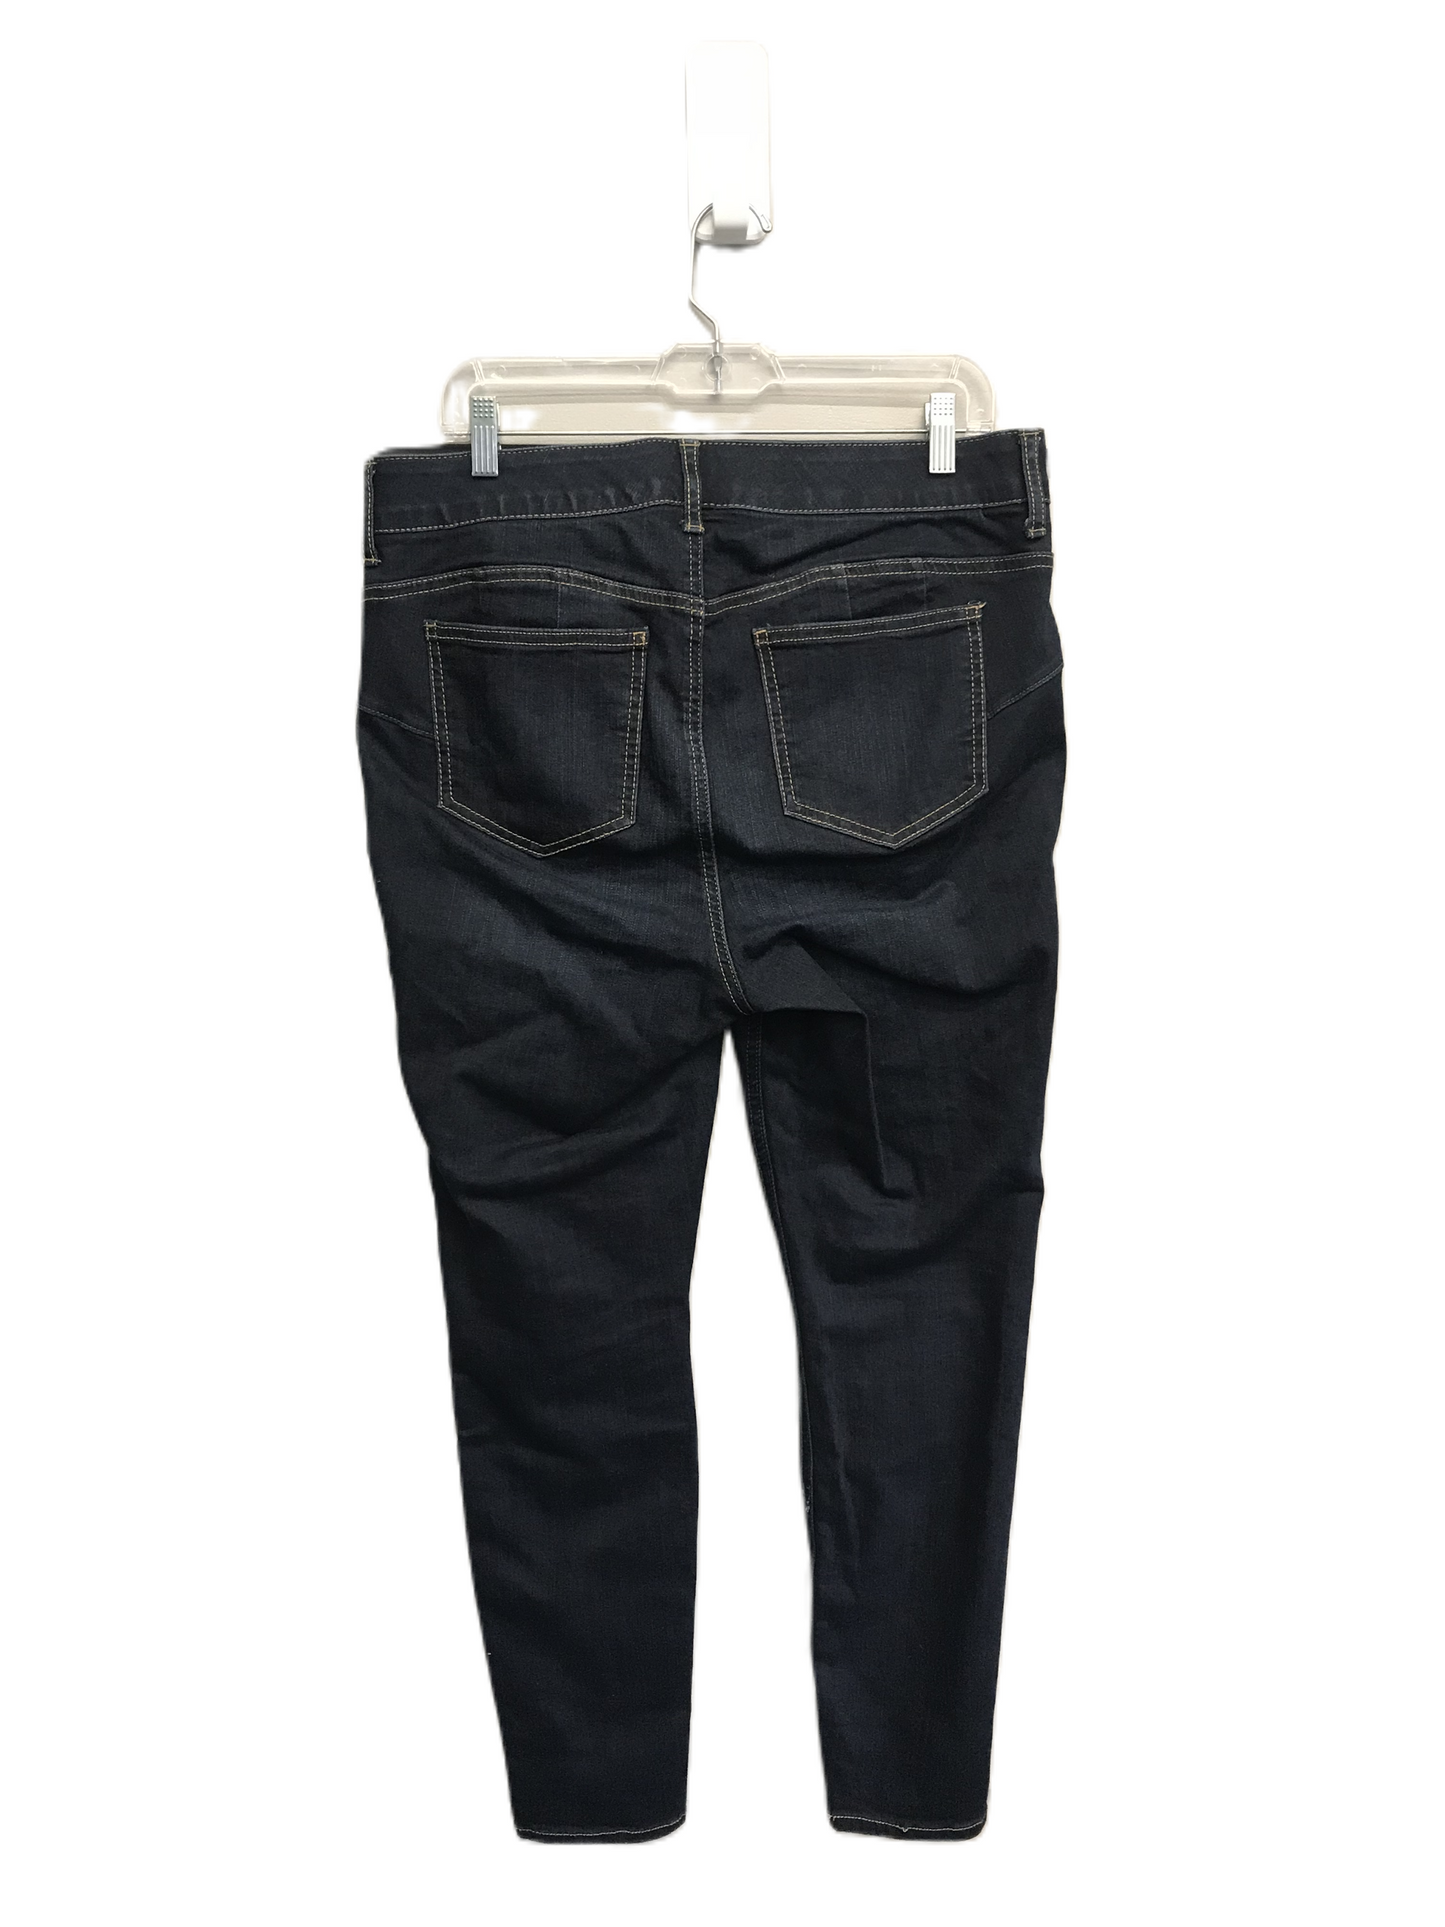 Blue Denim Jeans Skinny By Torrid, Size: 14